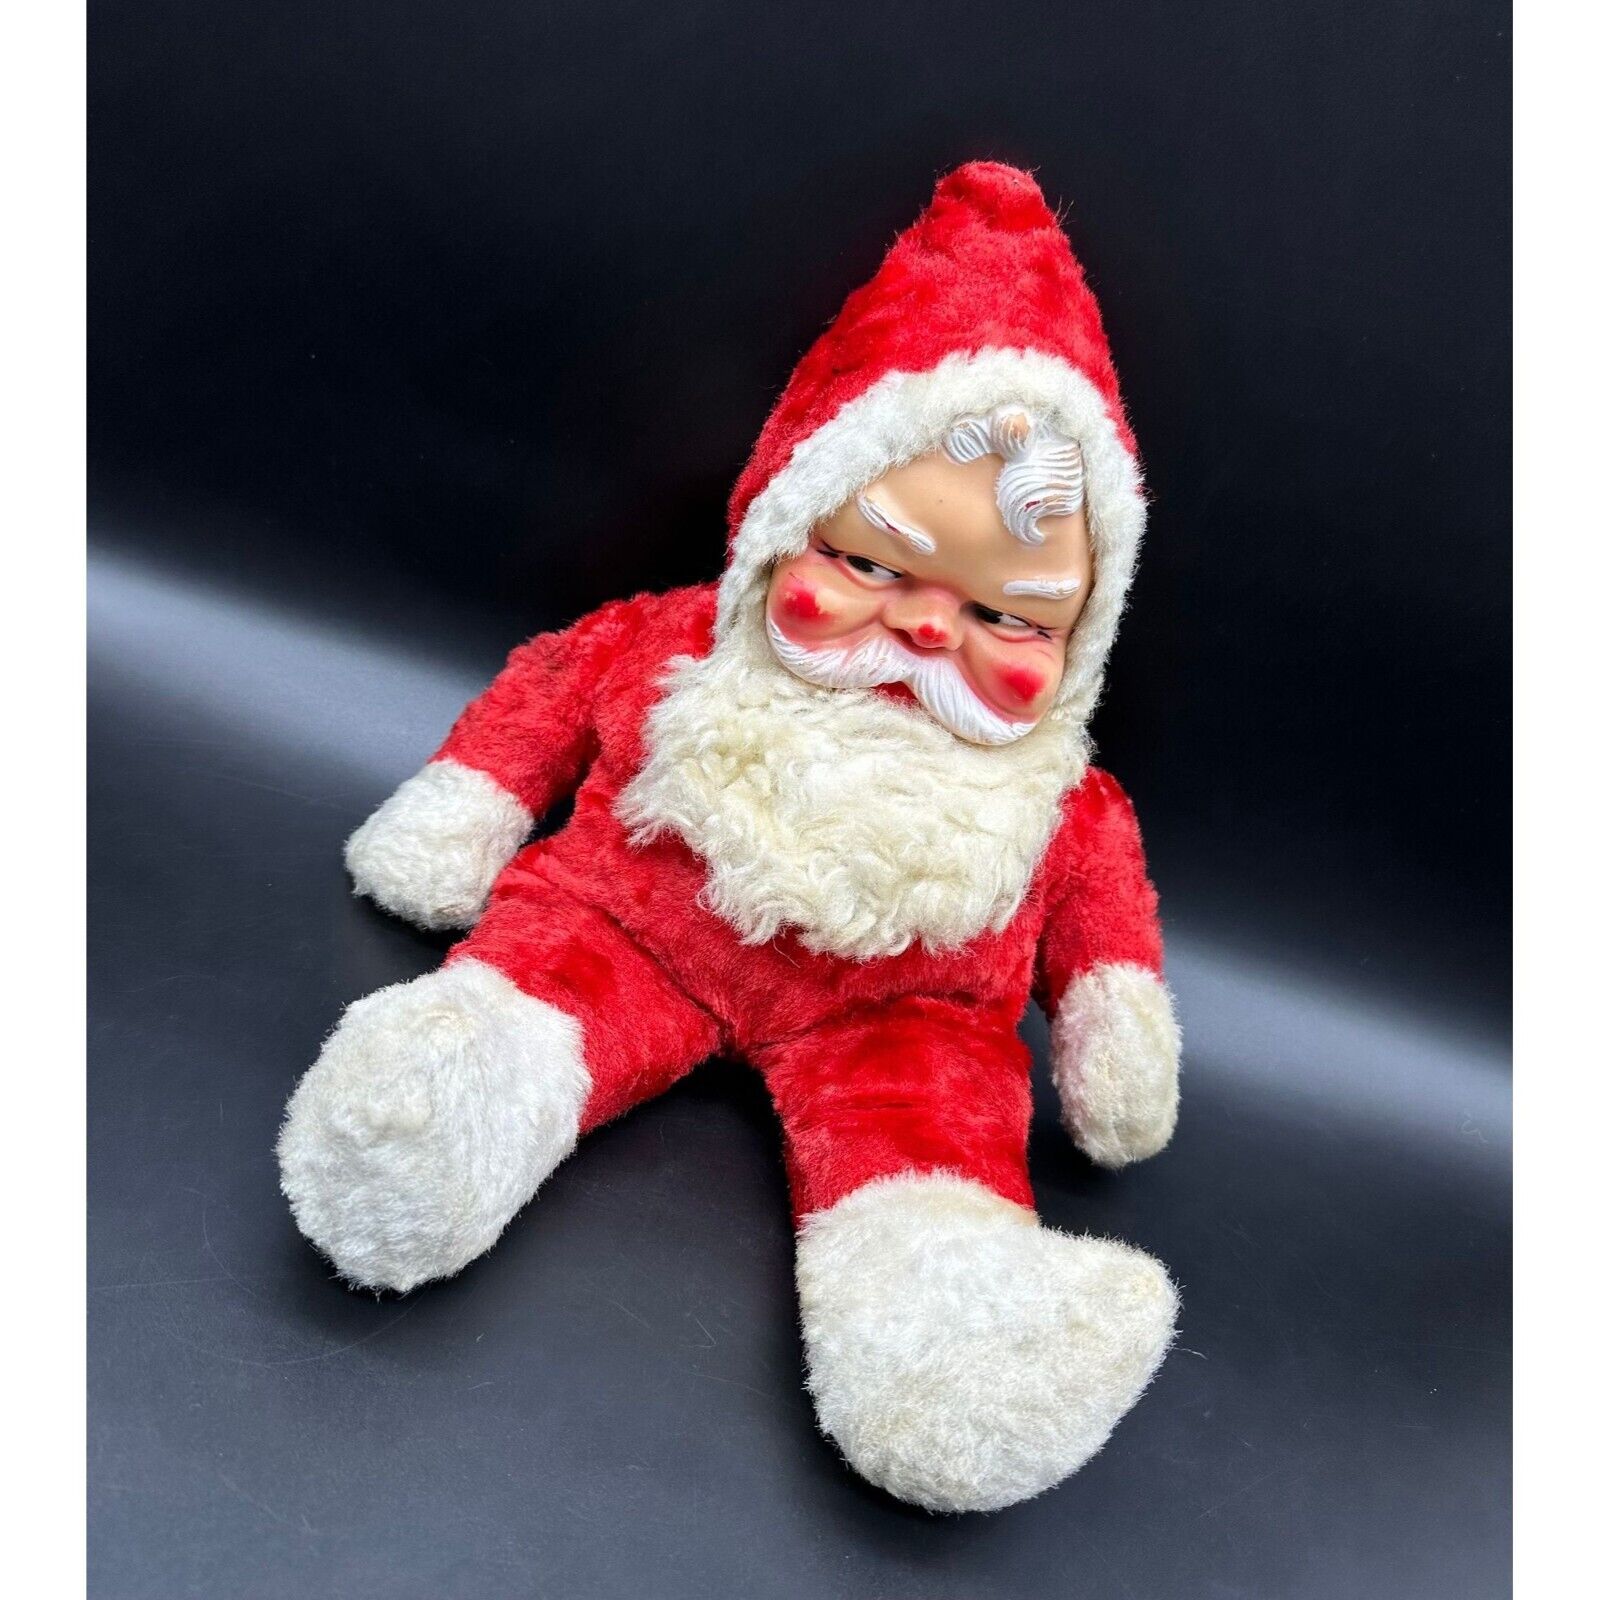 Vintage Rushton Rubber Face Santa Claus Doll Christmas Decoration 1950s Stuffed